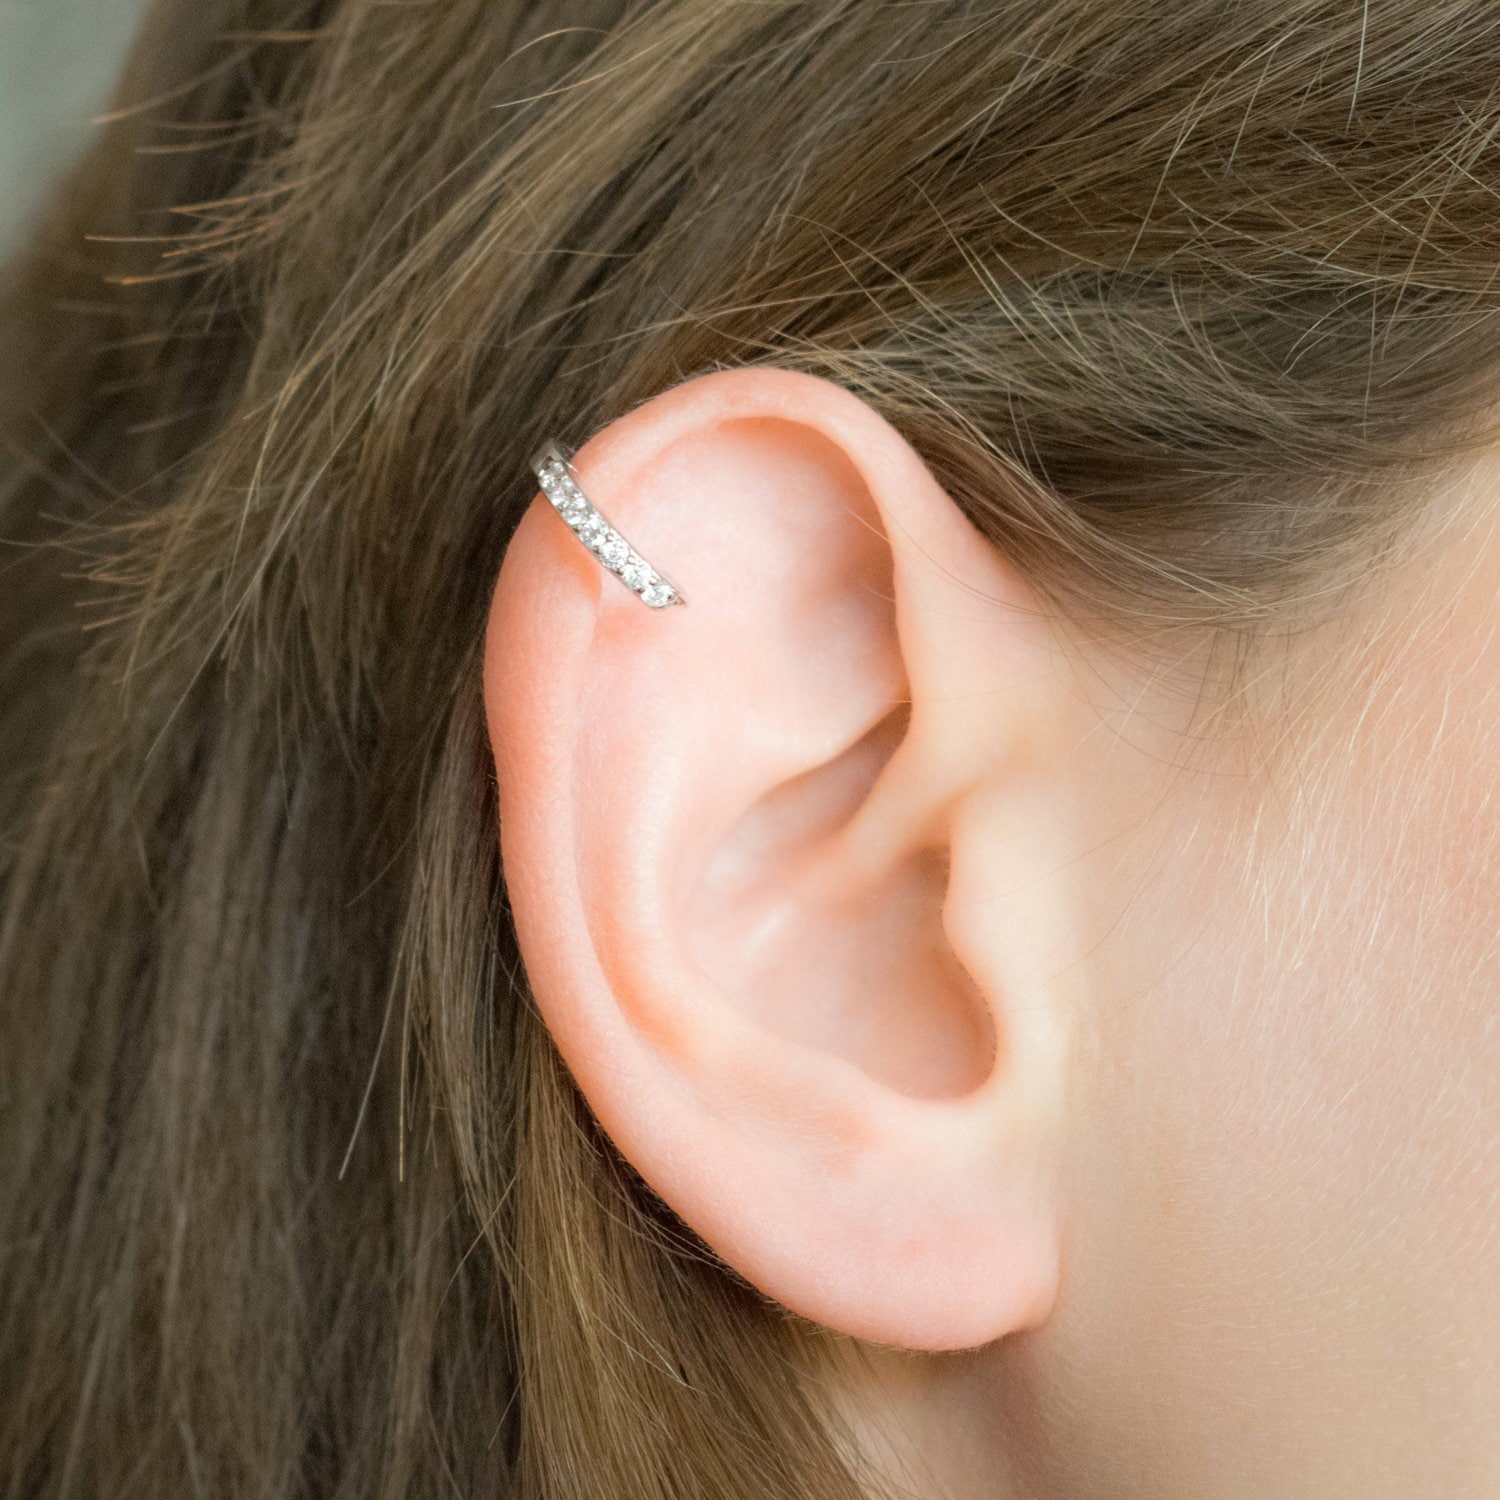 Amazon.com: Helix Earring Cartilage Piercing Diamond Cut Hoop Sterling  Silver Top Ear Jewelry : Handmade Products